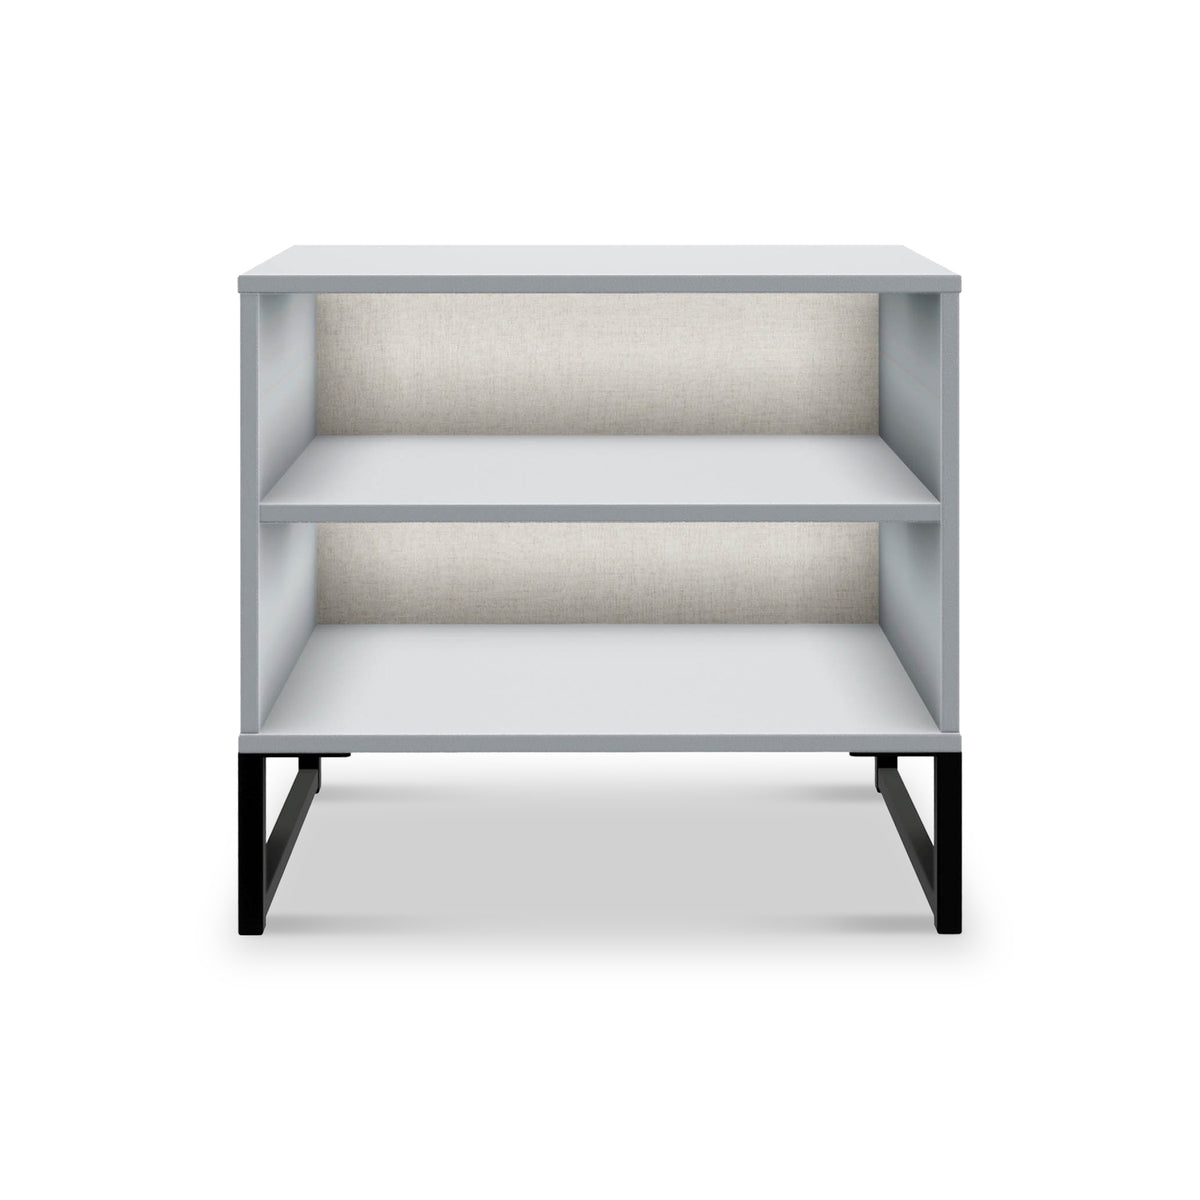 Hudson 2 Open Shelf Bedside in Grey from Roseland Furniture